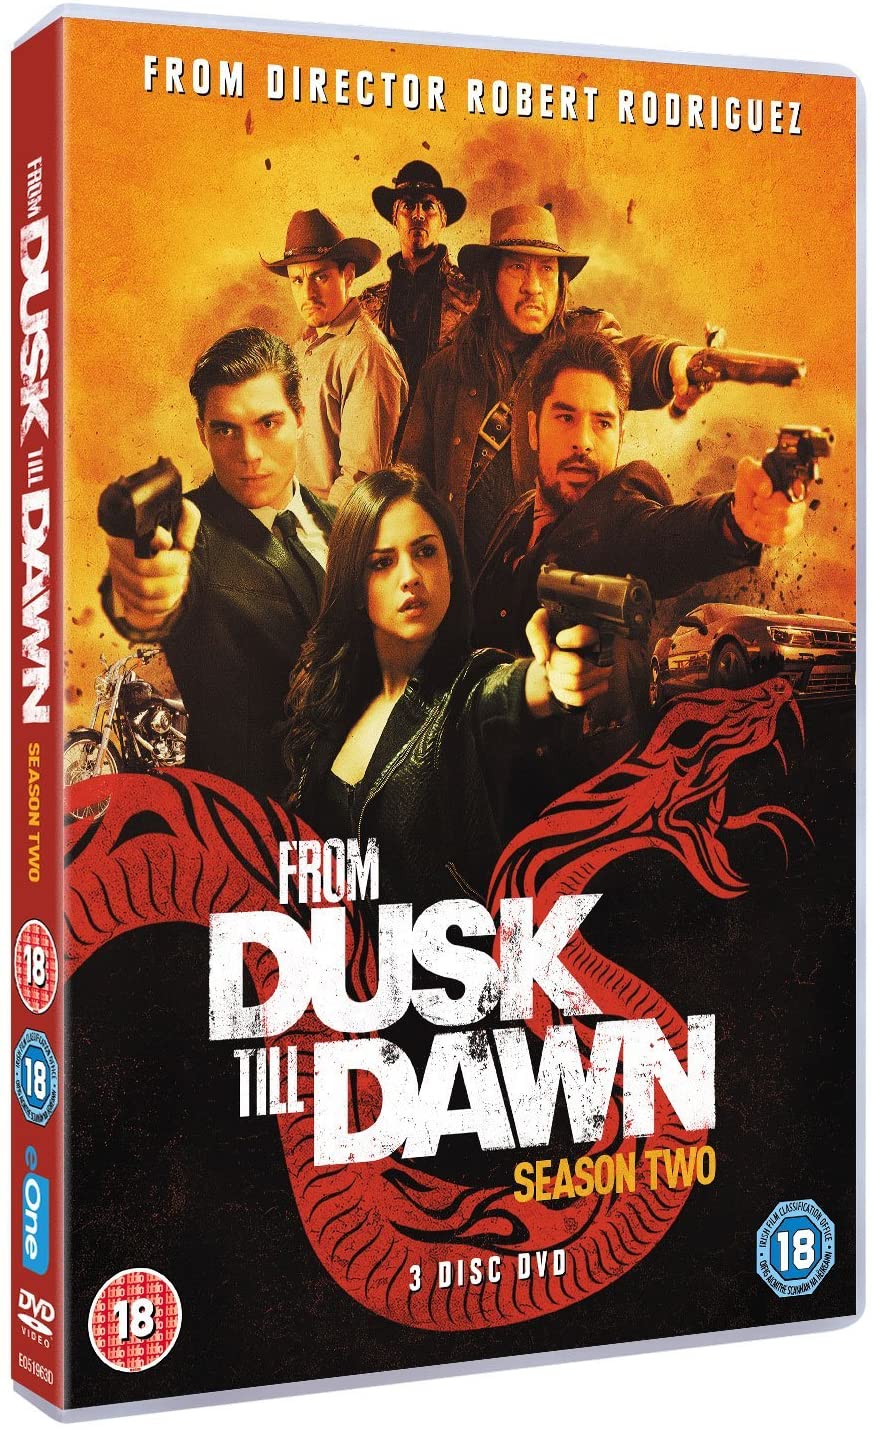 From Dusk Till Dawn: Season 2 (DVD)